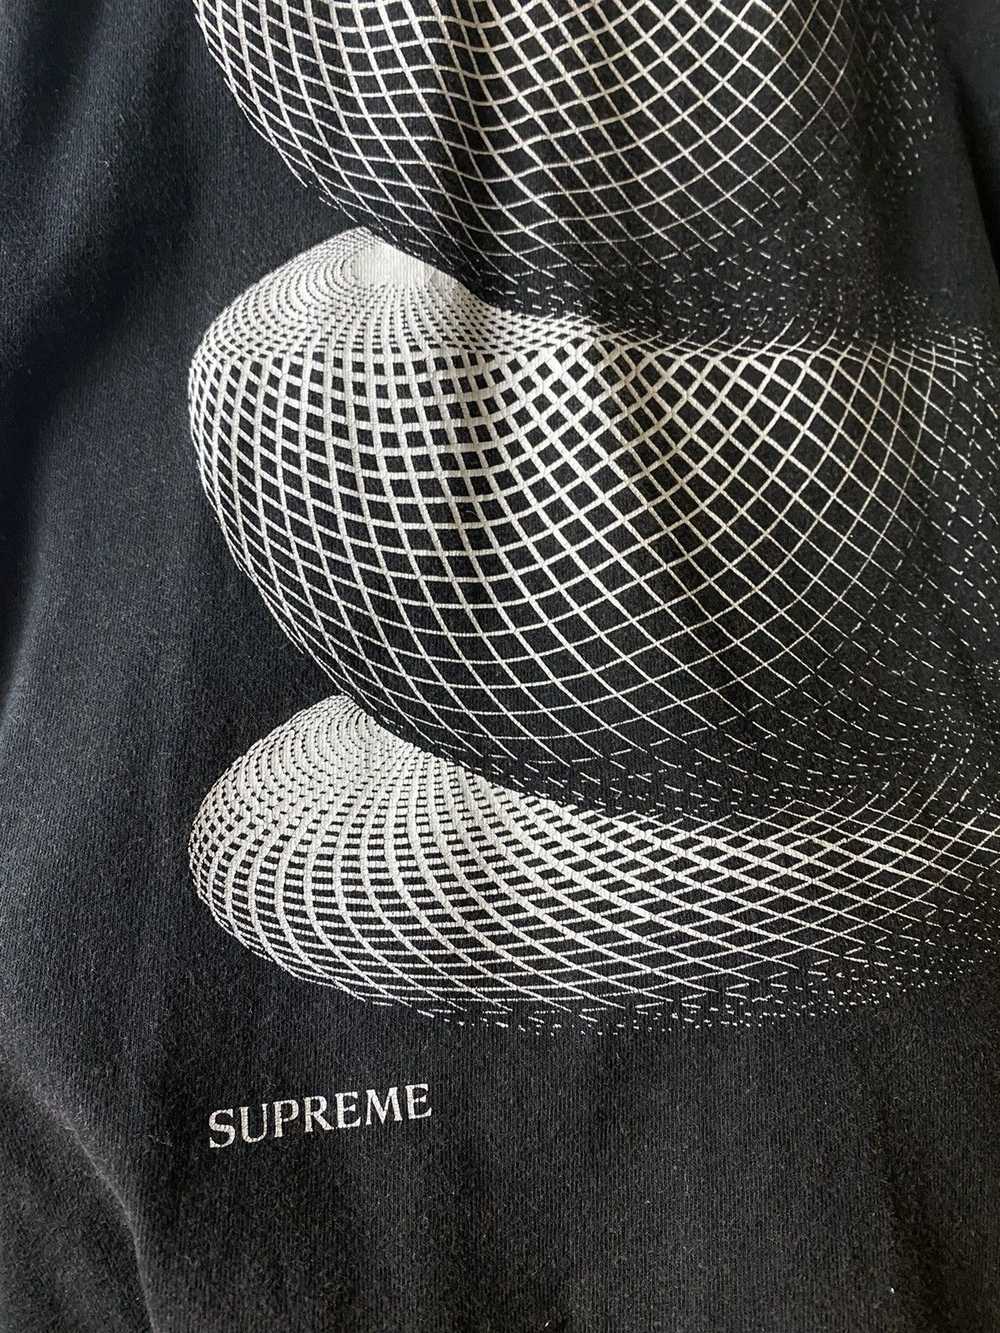 Supreme Supreme - Black MC Escher Tee - image 4